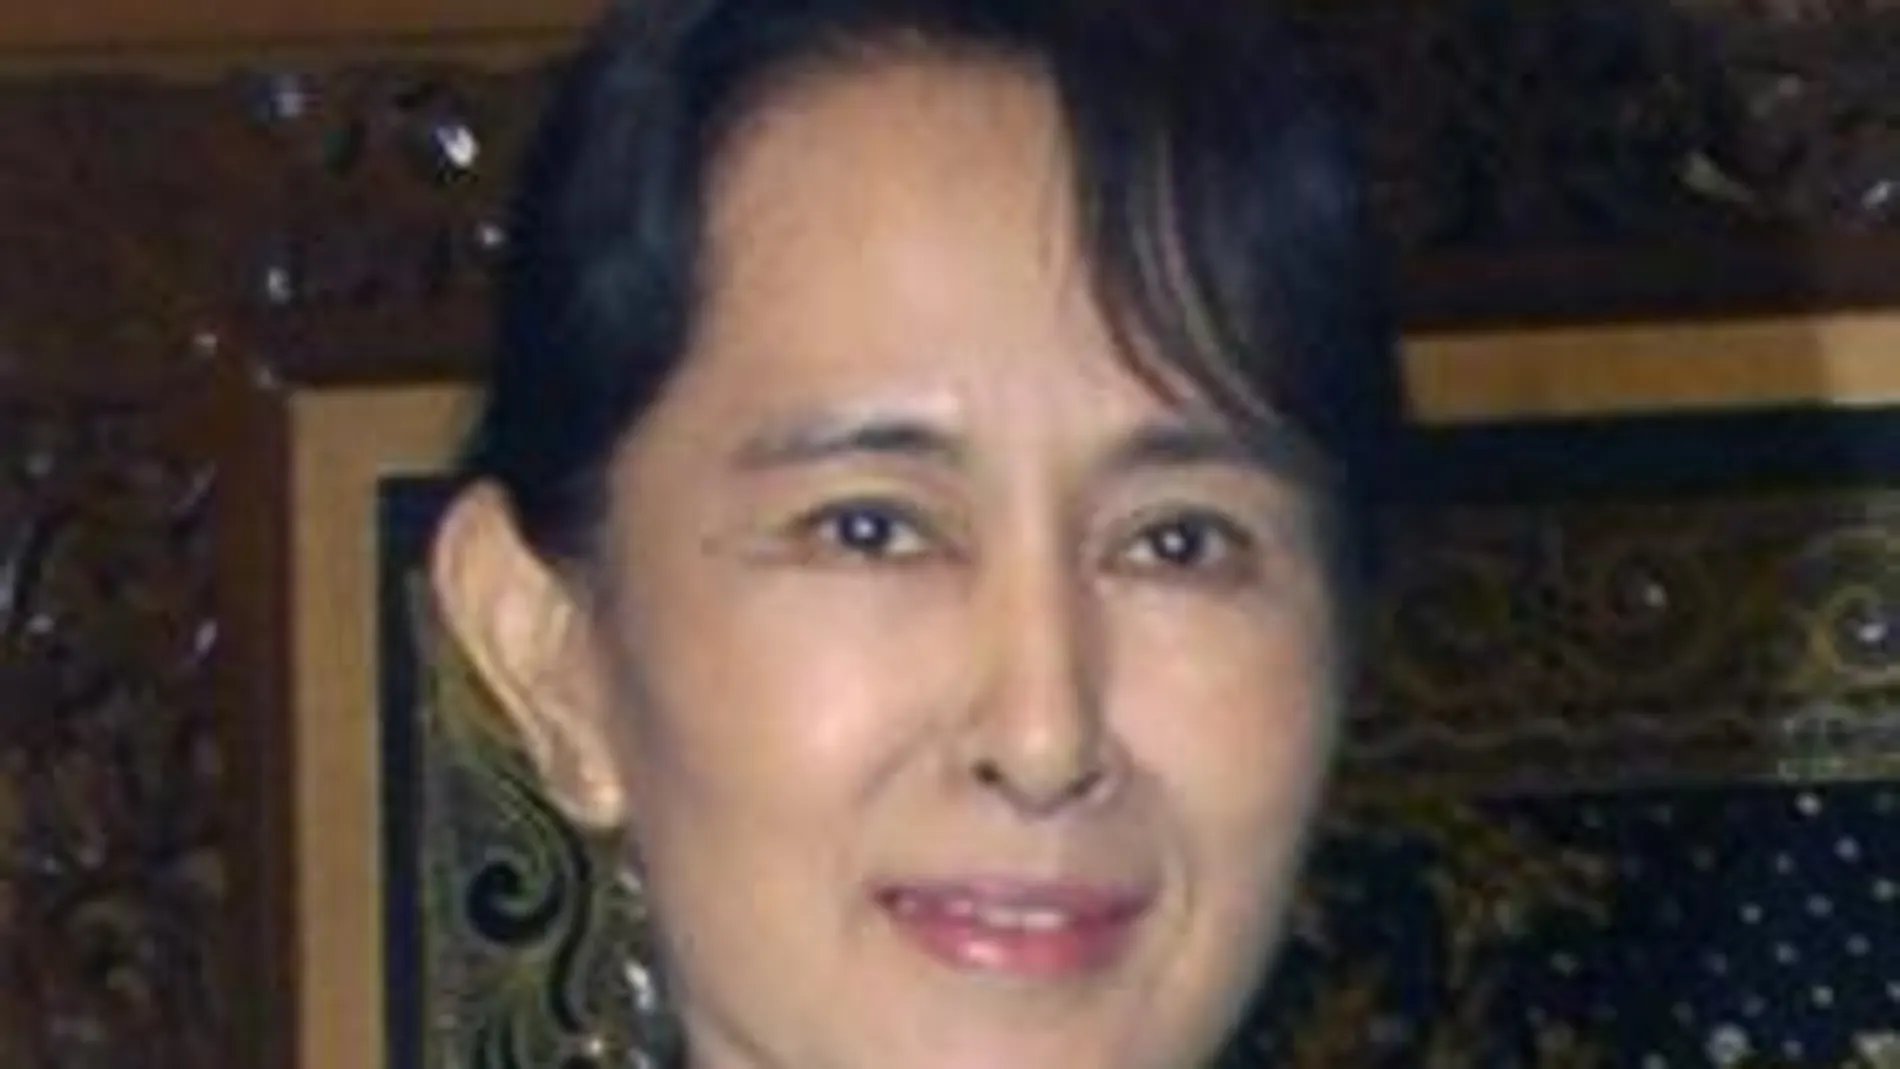 La UE pedirá a China que evite la condena de la Nobel birmana San Suu Kyi